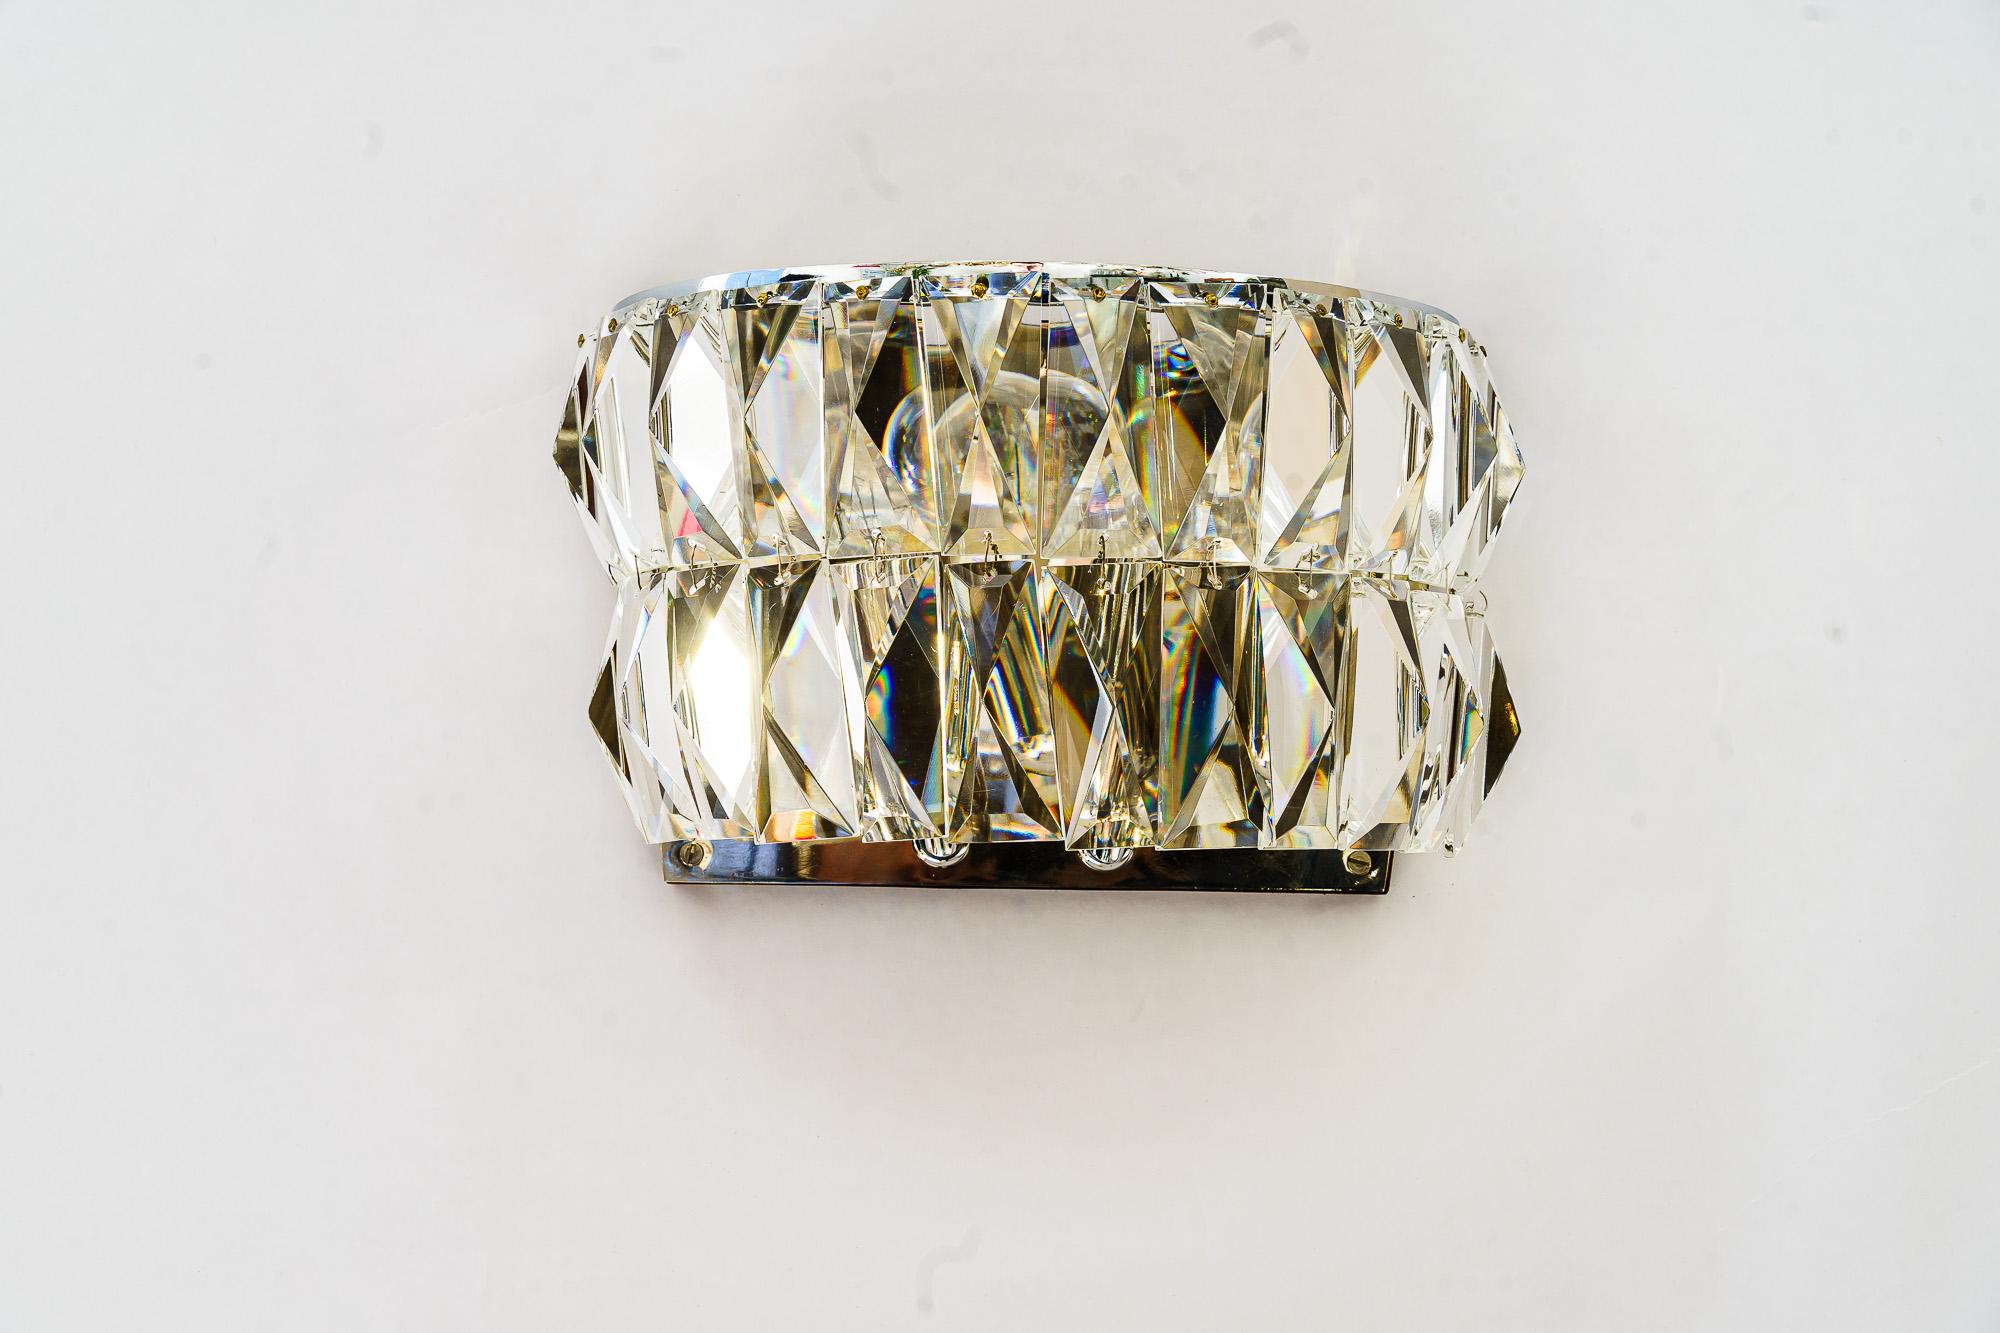 2 bakalowis nickel crystal wall lamps vienna around 1950s
Brass nickel-plated
Original condition